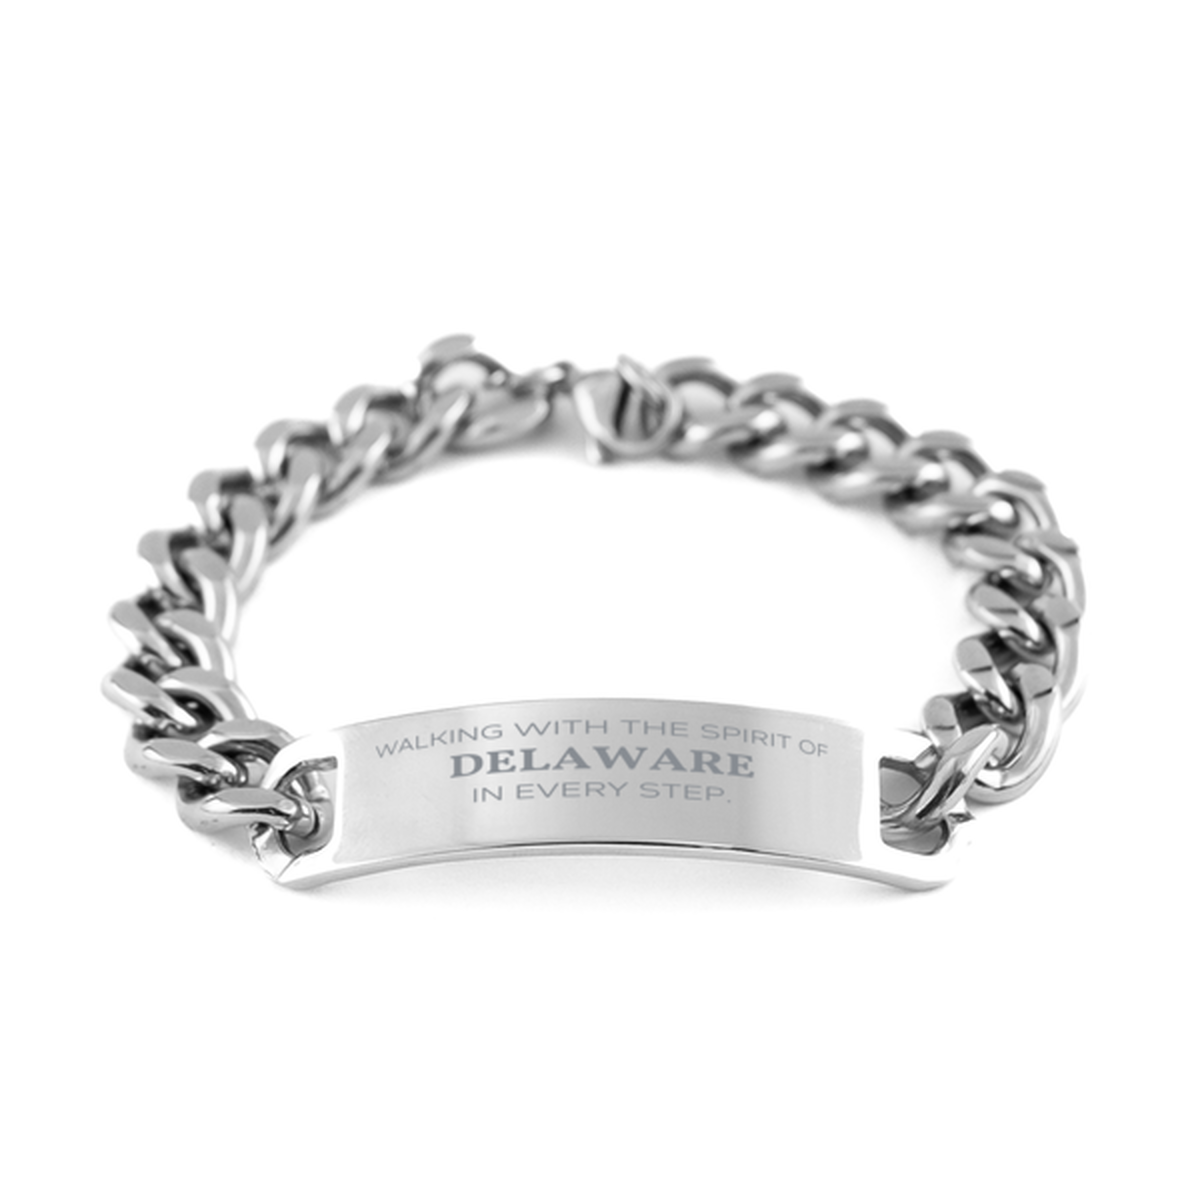 Delaware Gifts, Walking with the spirit, Love Delaware Birthday Christmas Cuban Chain Stainless Steel Bracelet For Delaware People, Men, Women, Friends